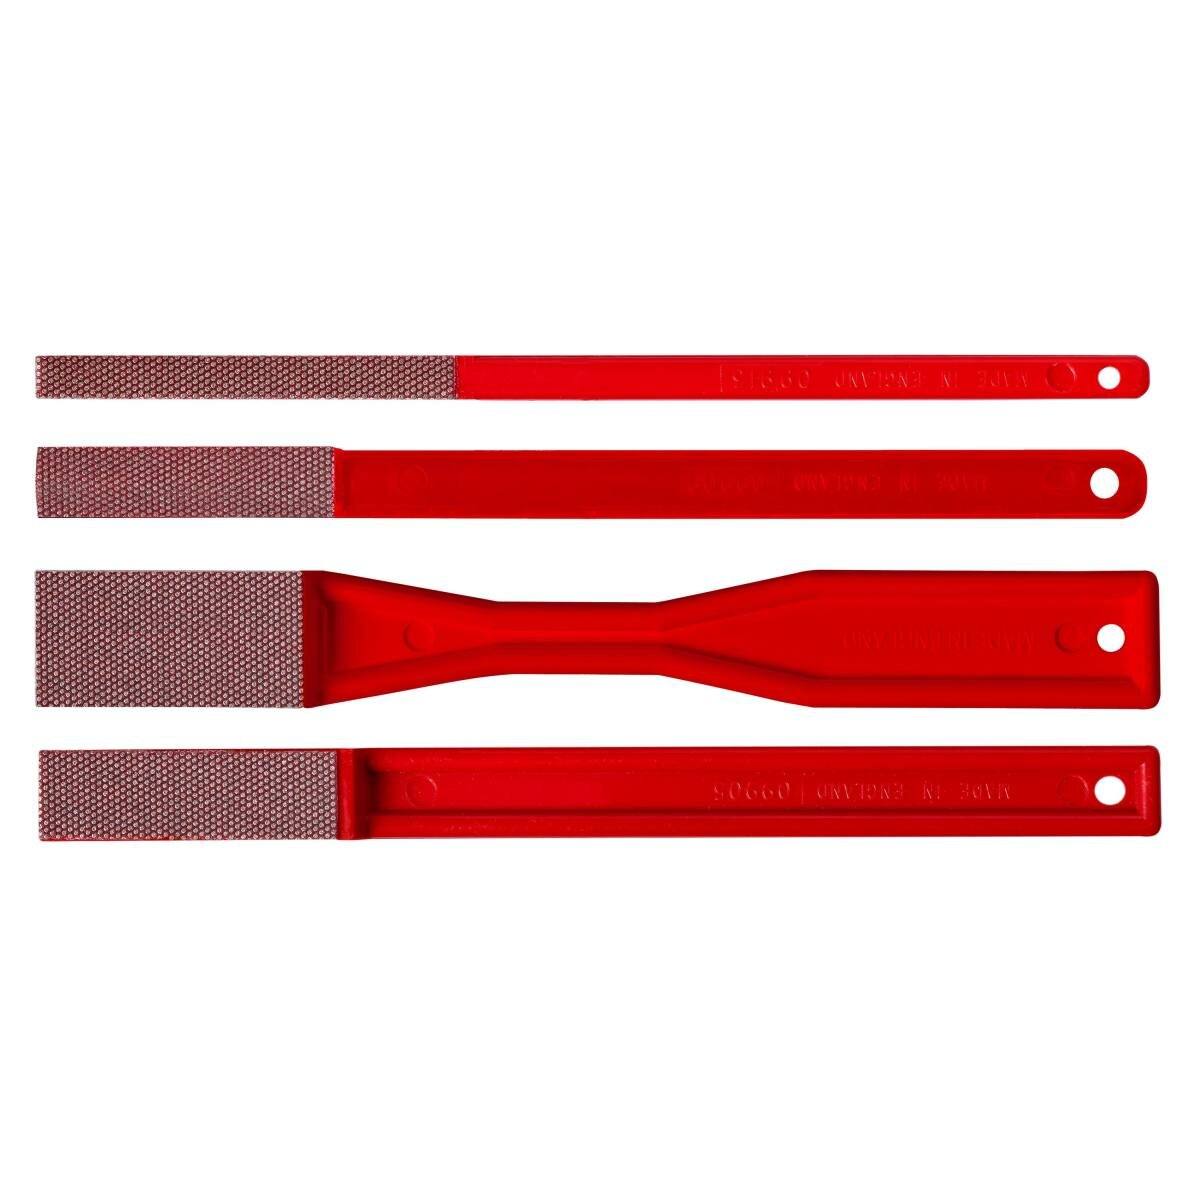  3M Joustava timanttiviila 6210J, nro 4, punainen, 6 mm x 62 mm, N074